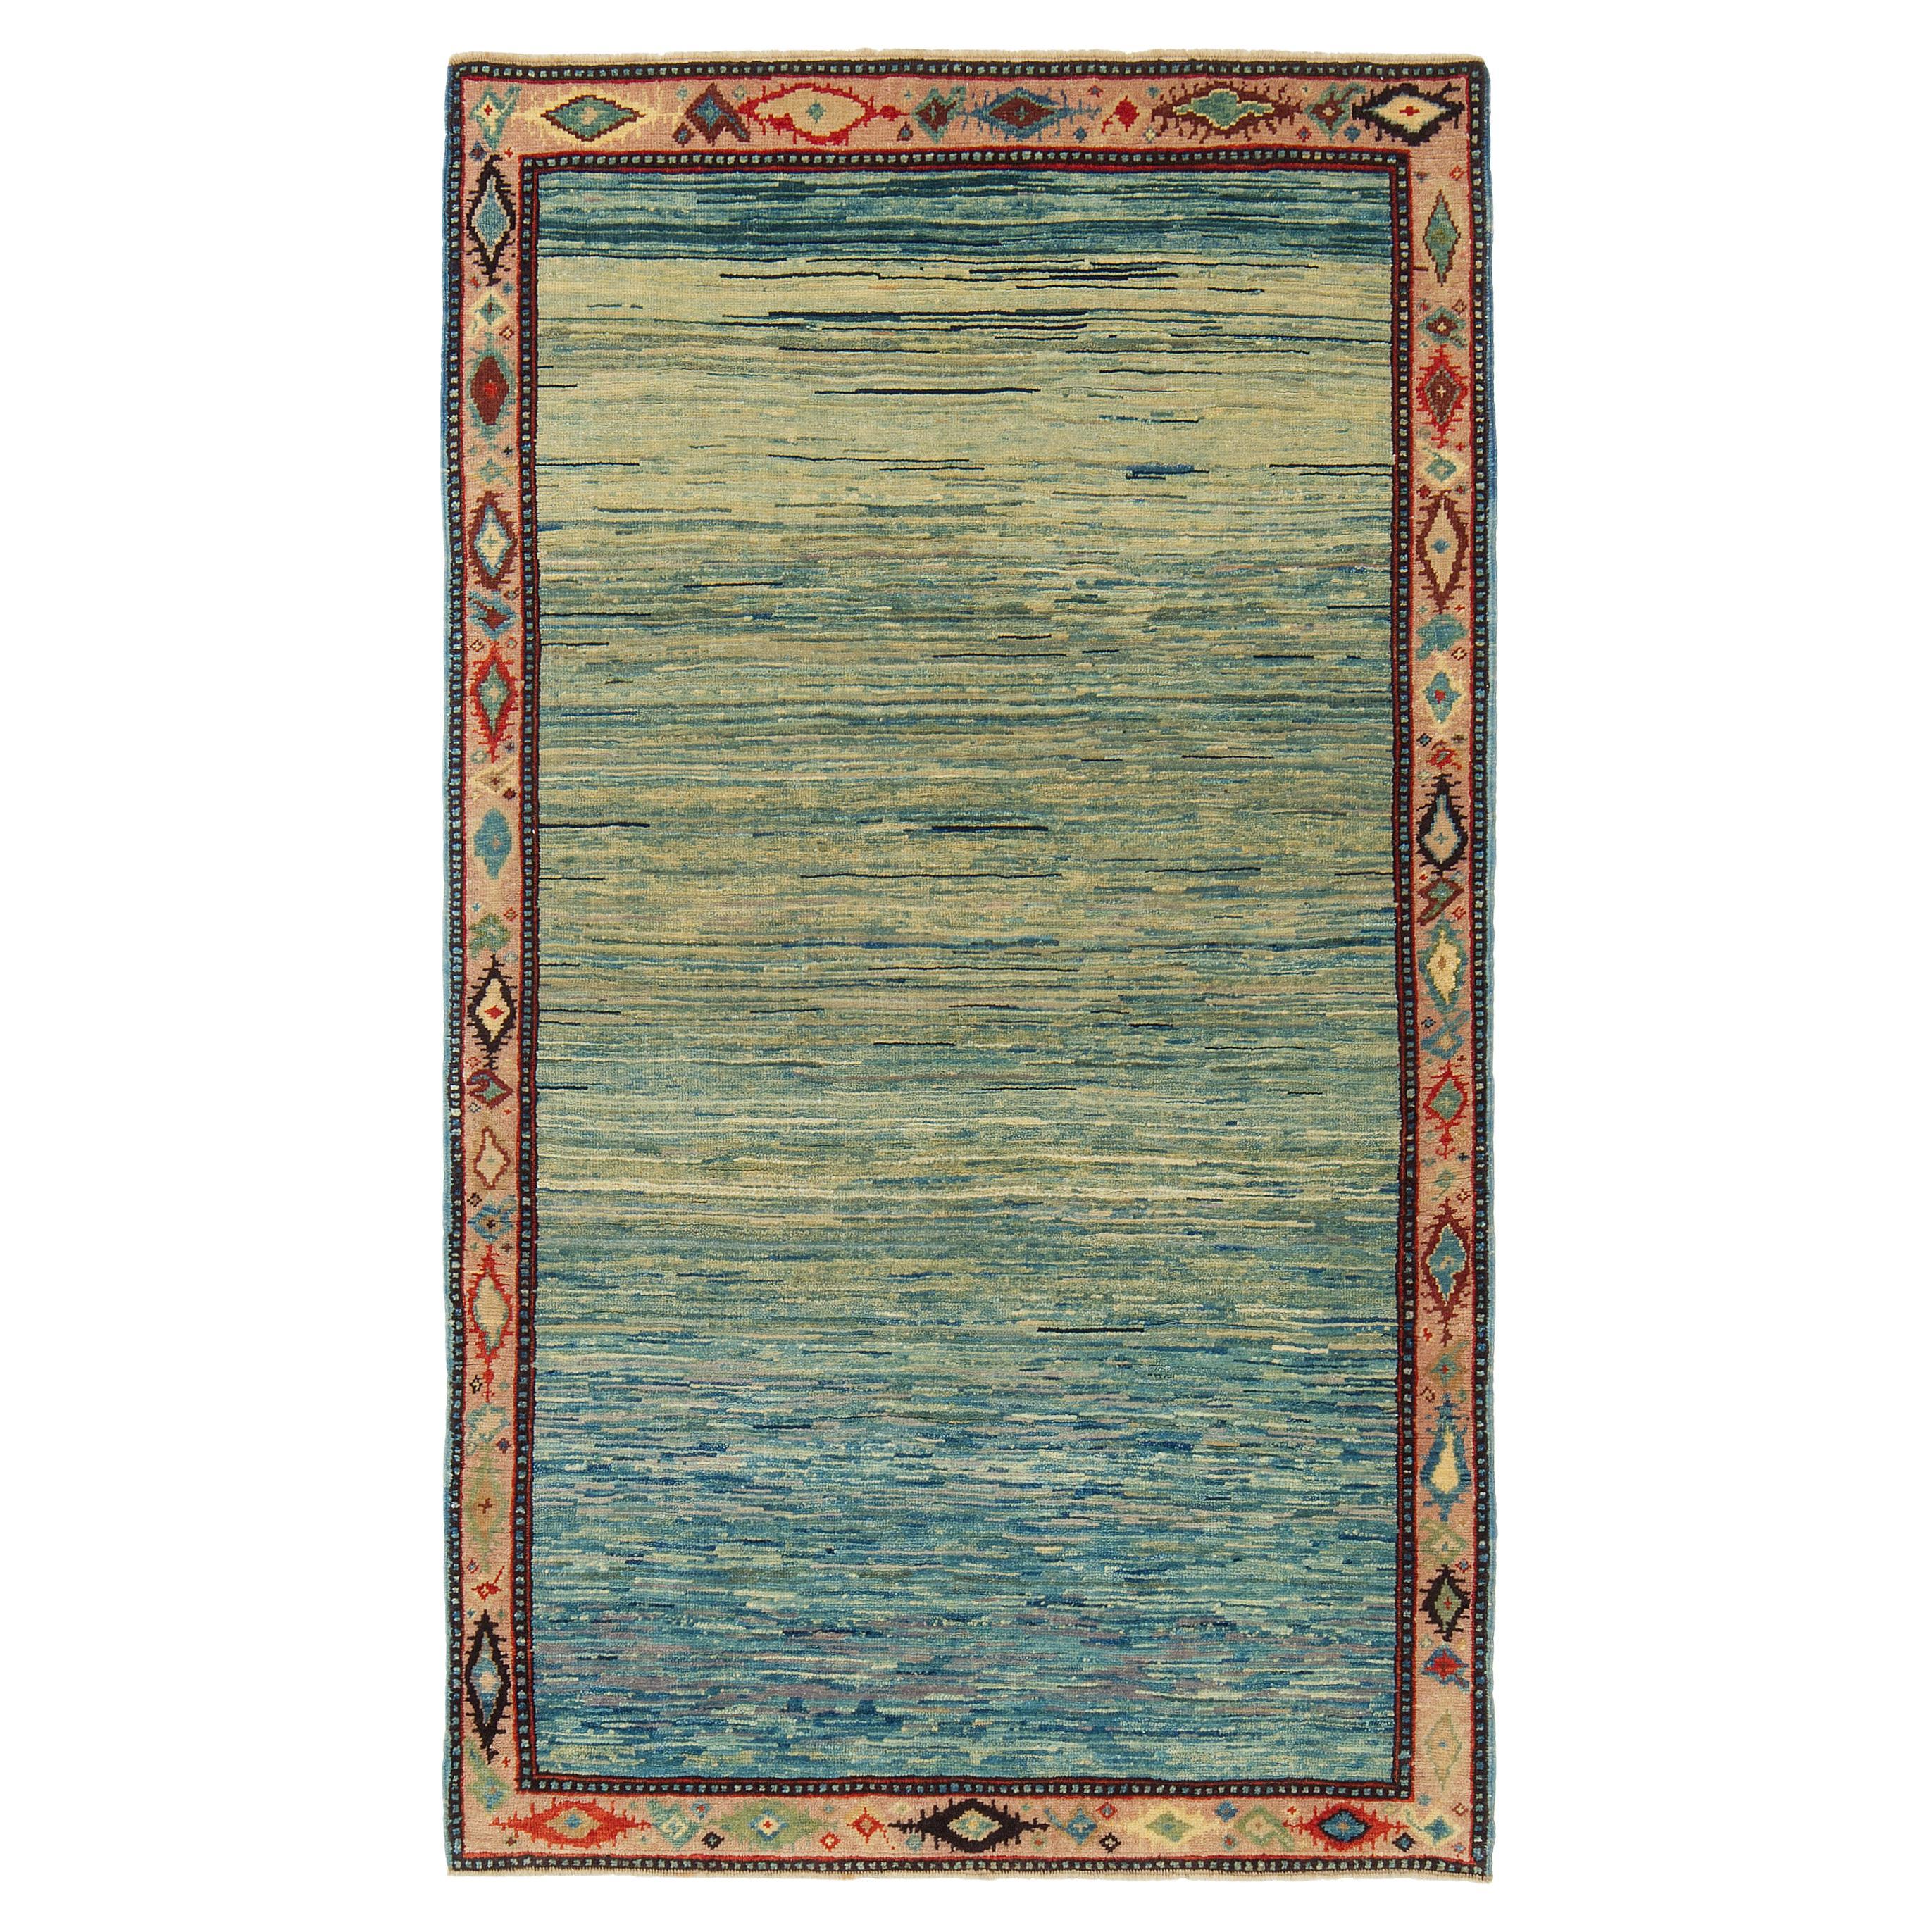 Ararat Rugs the Blue Color Rug Modern Carpet Natural Dyed